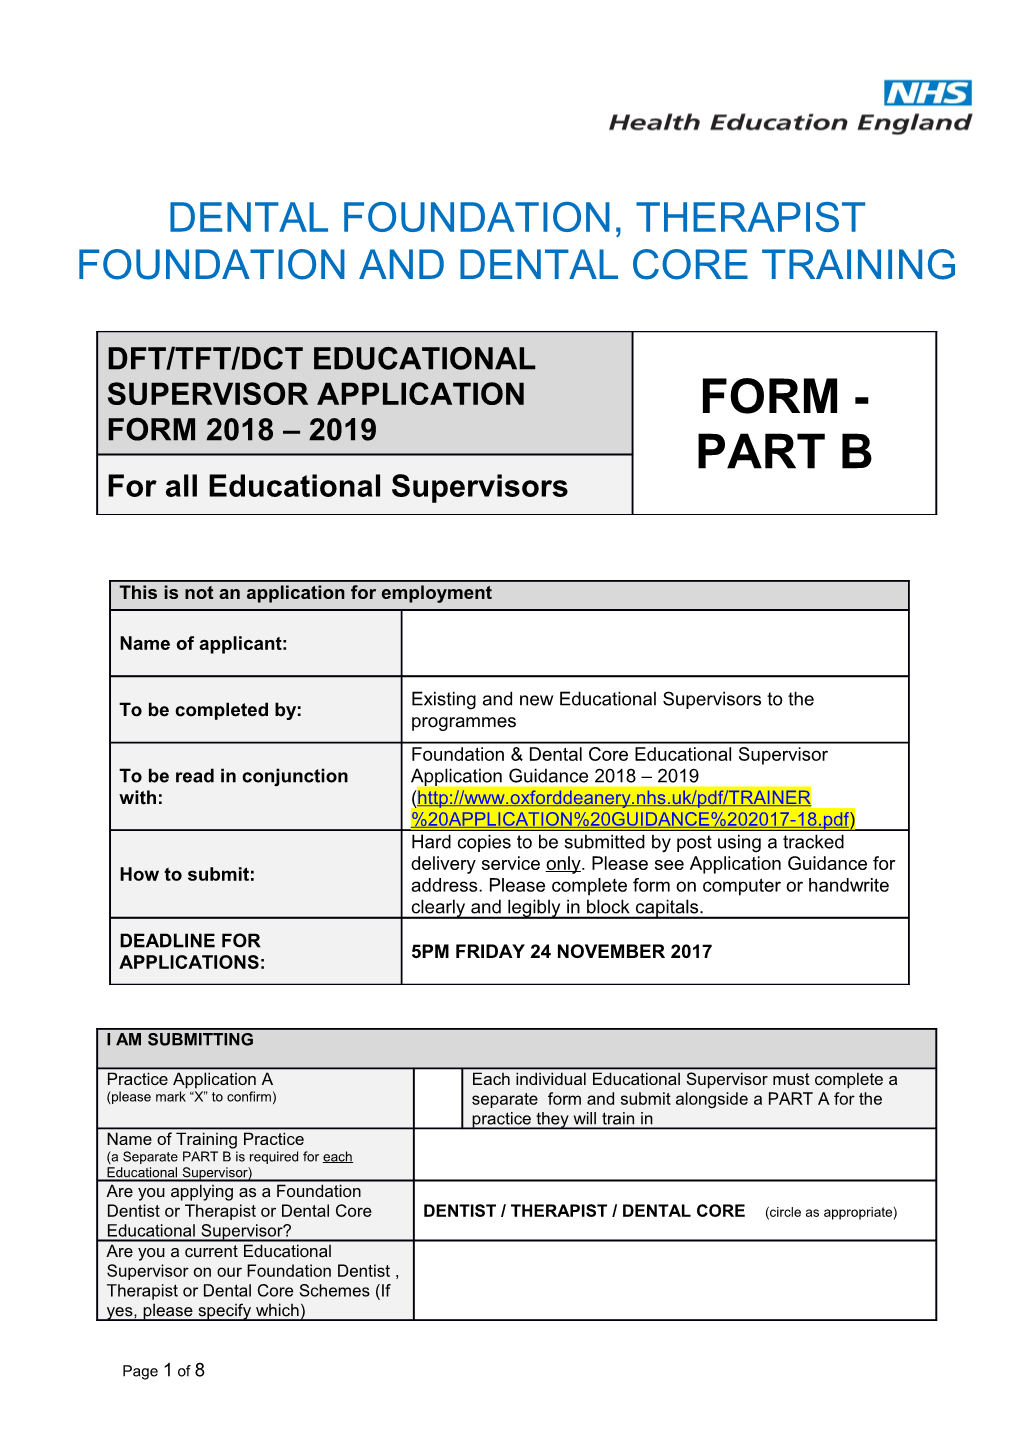 Dentalfoundation, Therapist Foundation and Dental Core Training